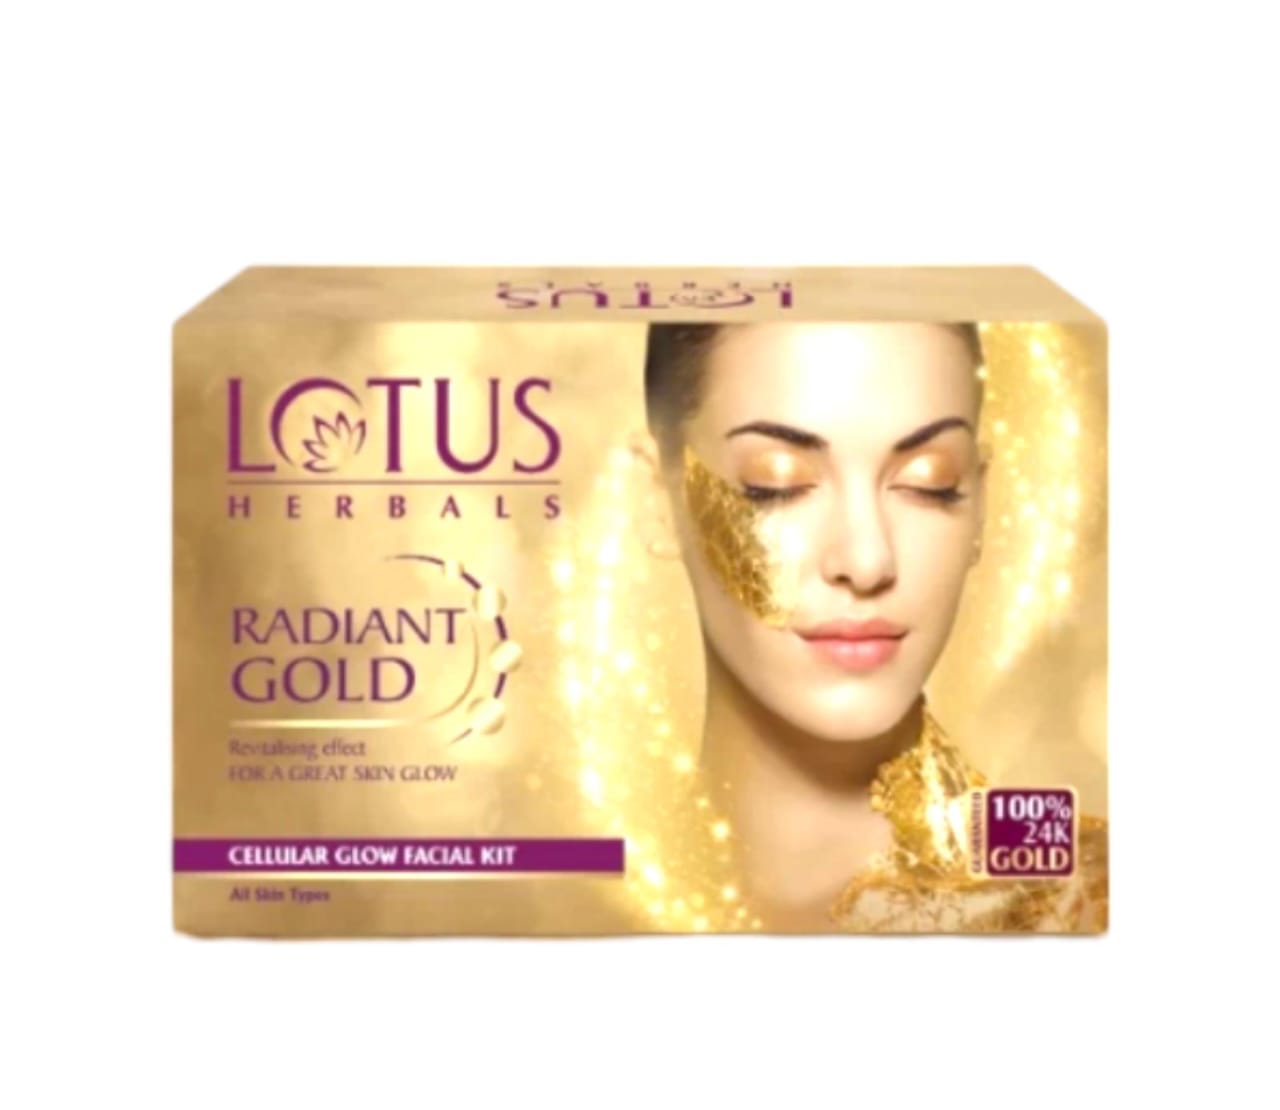 Lotus  Herbals Radiant Gold Cellular Glow Facial Kit